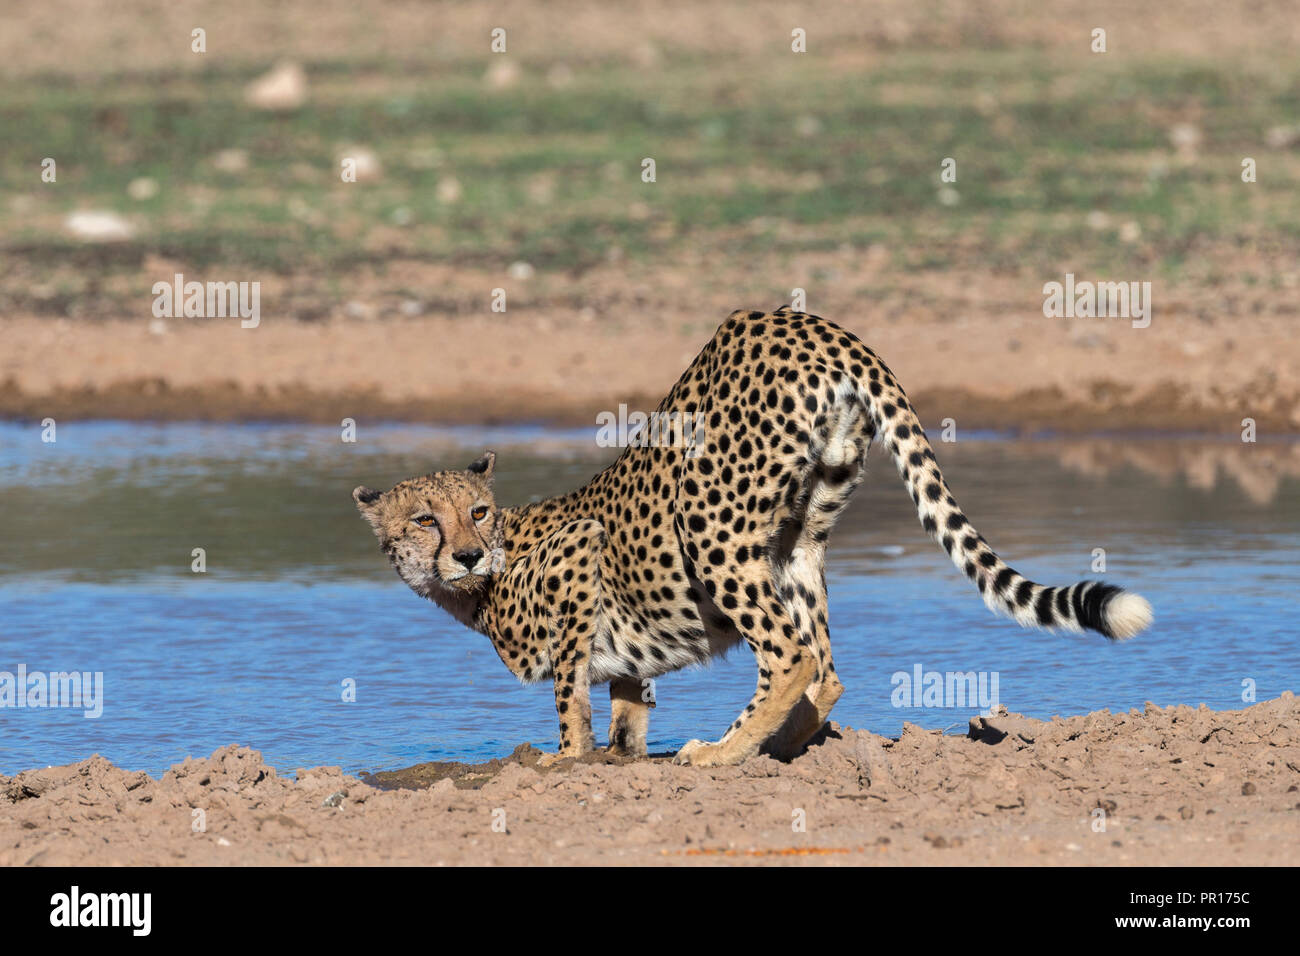 Cheetah (Acinonyx jubatus) at water, Kgalagadi Transfrontier Park, South Africa, Africa Stock Photo